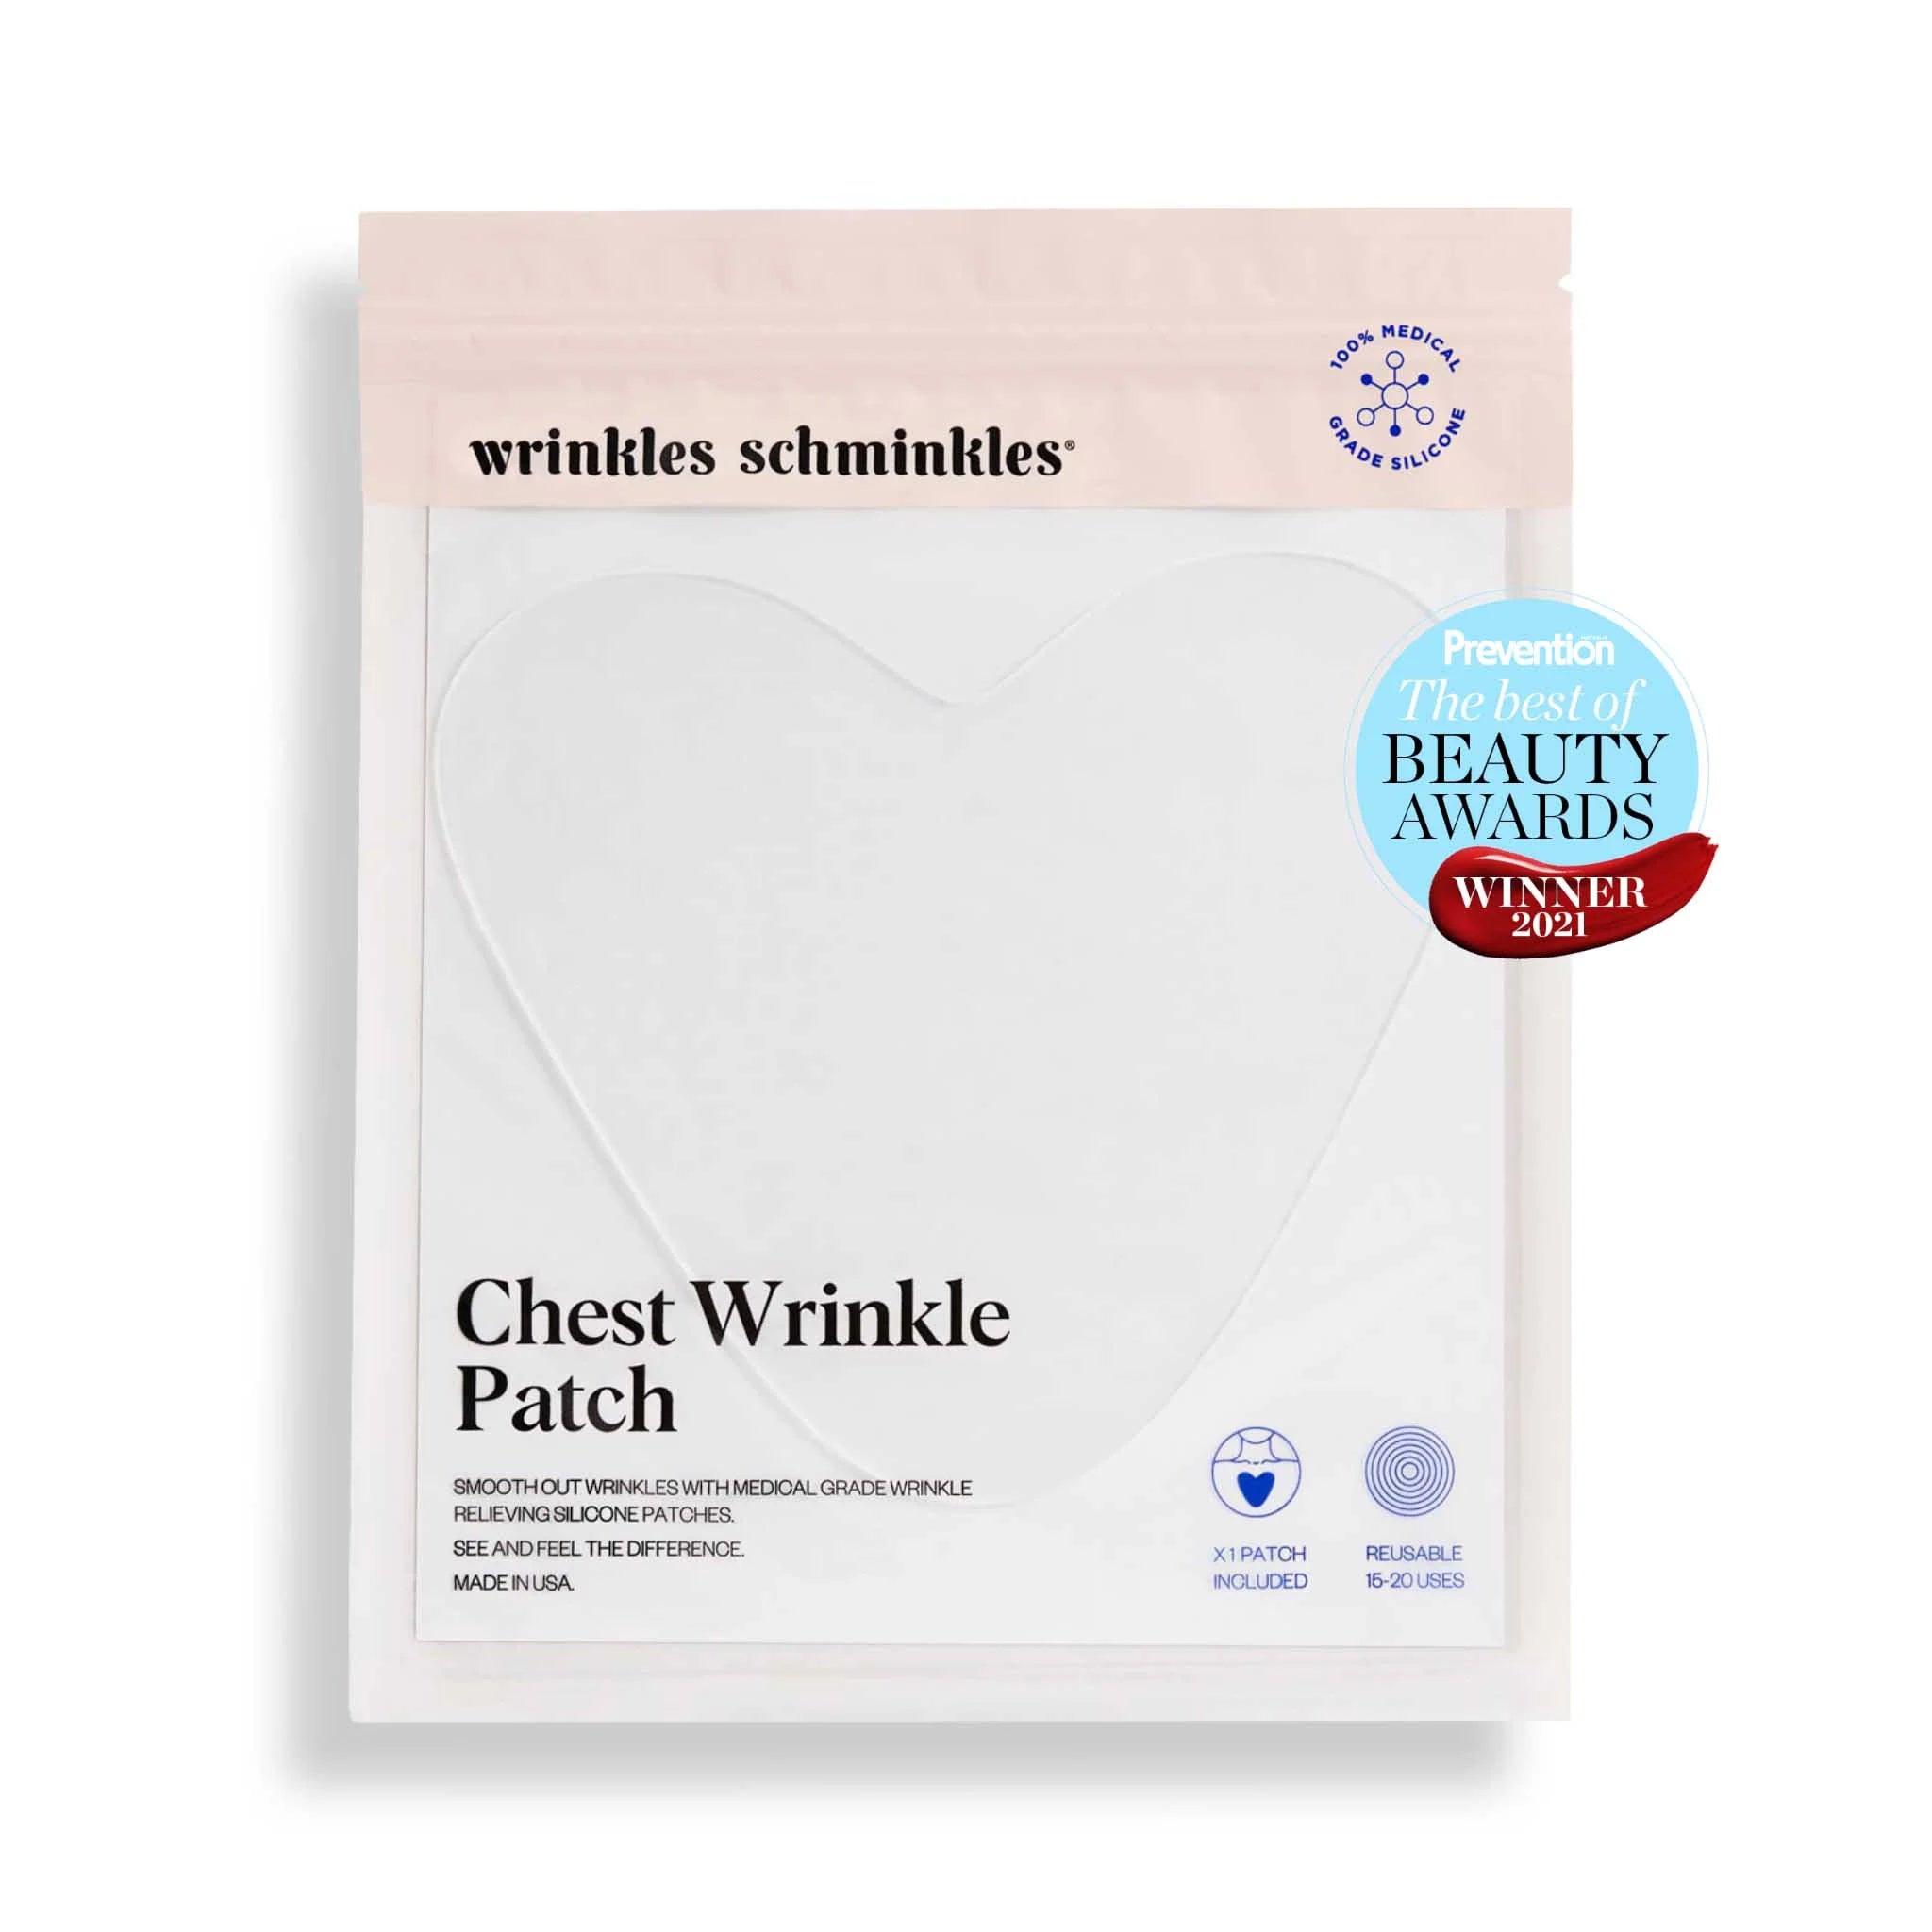 Wrinkles Schminkle Chest Wrinkle Patch